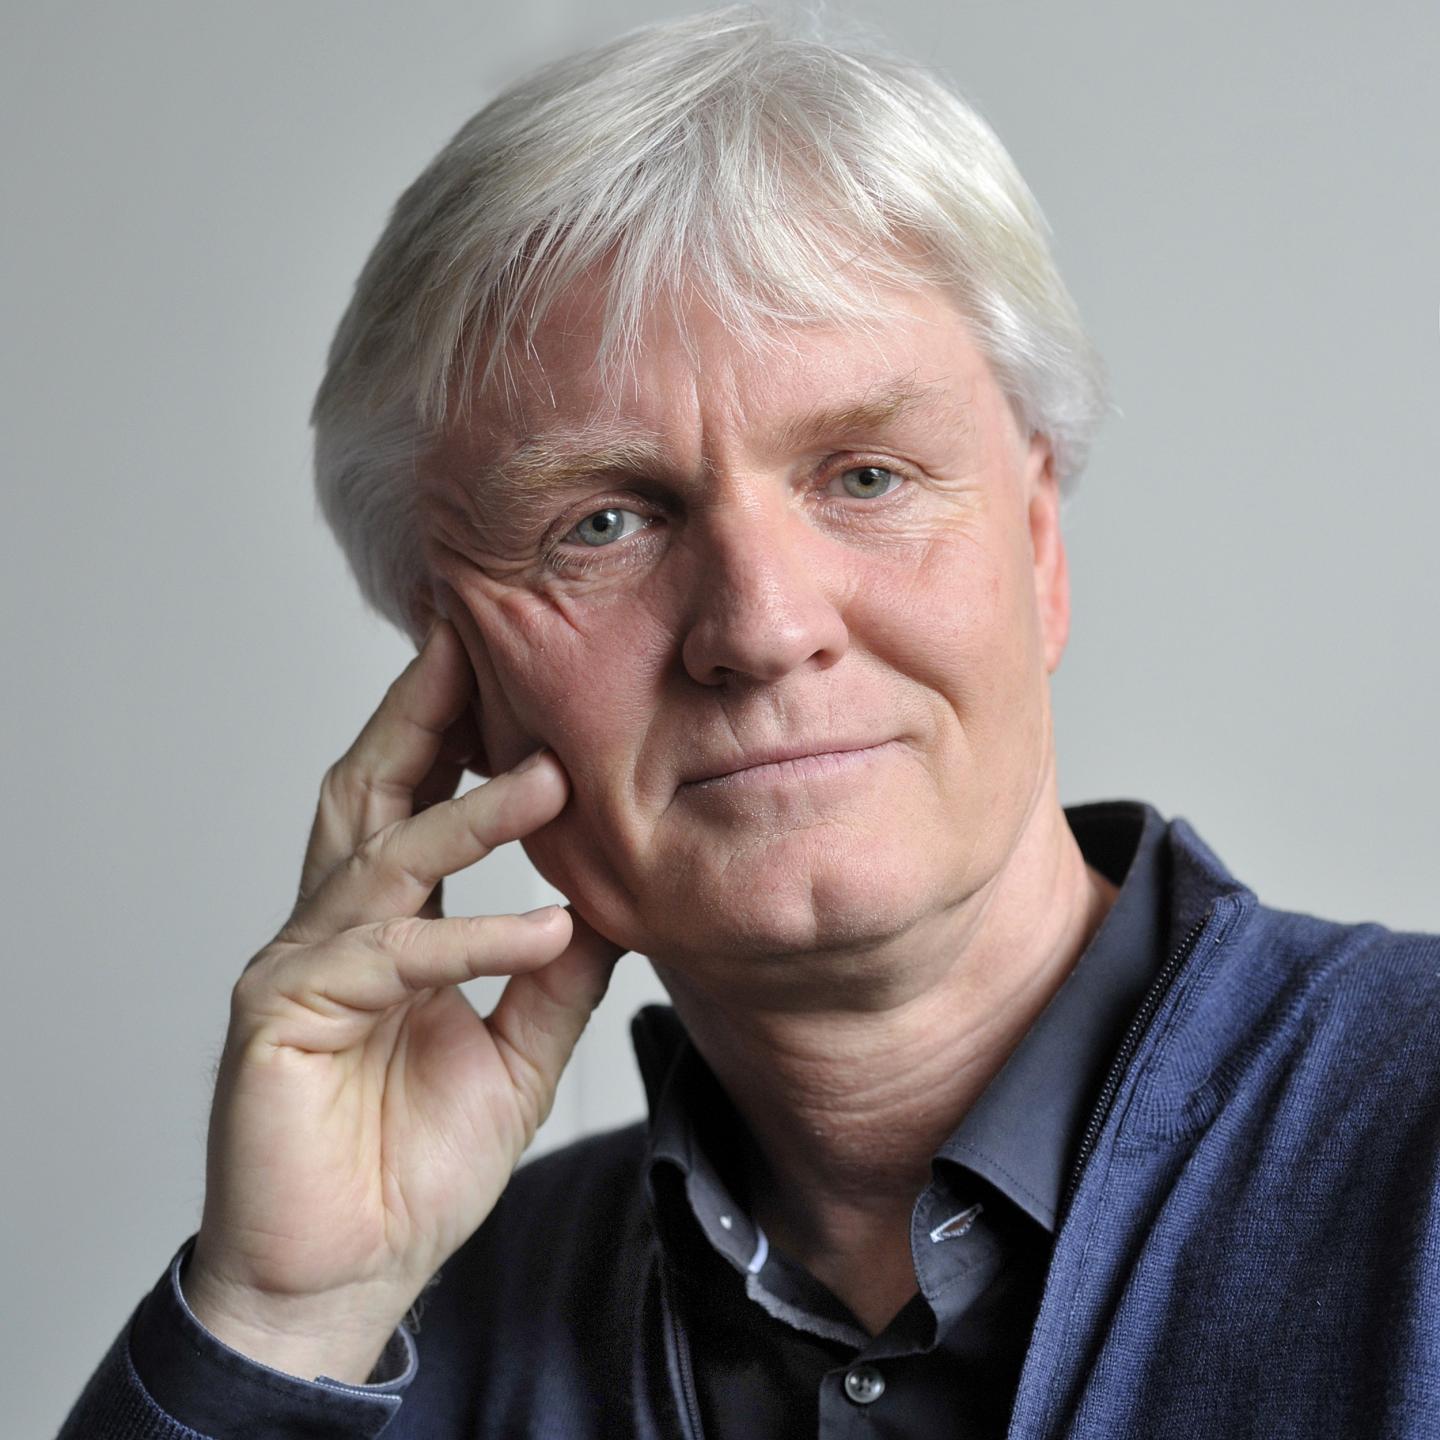 Bert Poolman, Professor of Biochemistry at the University of Groningen